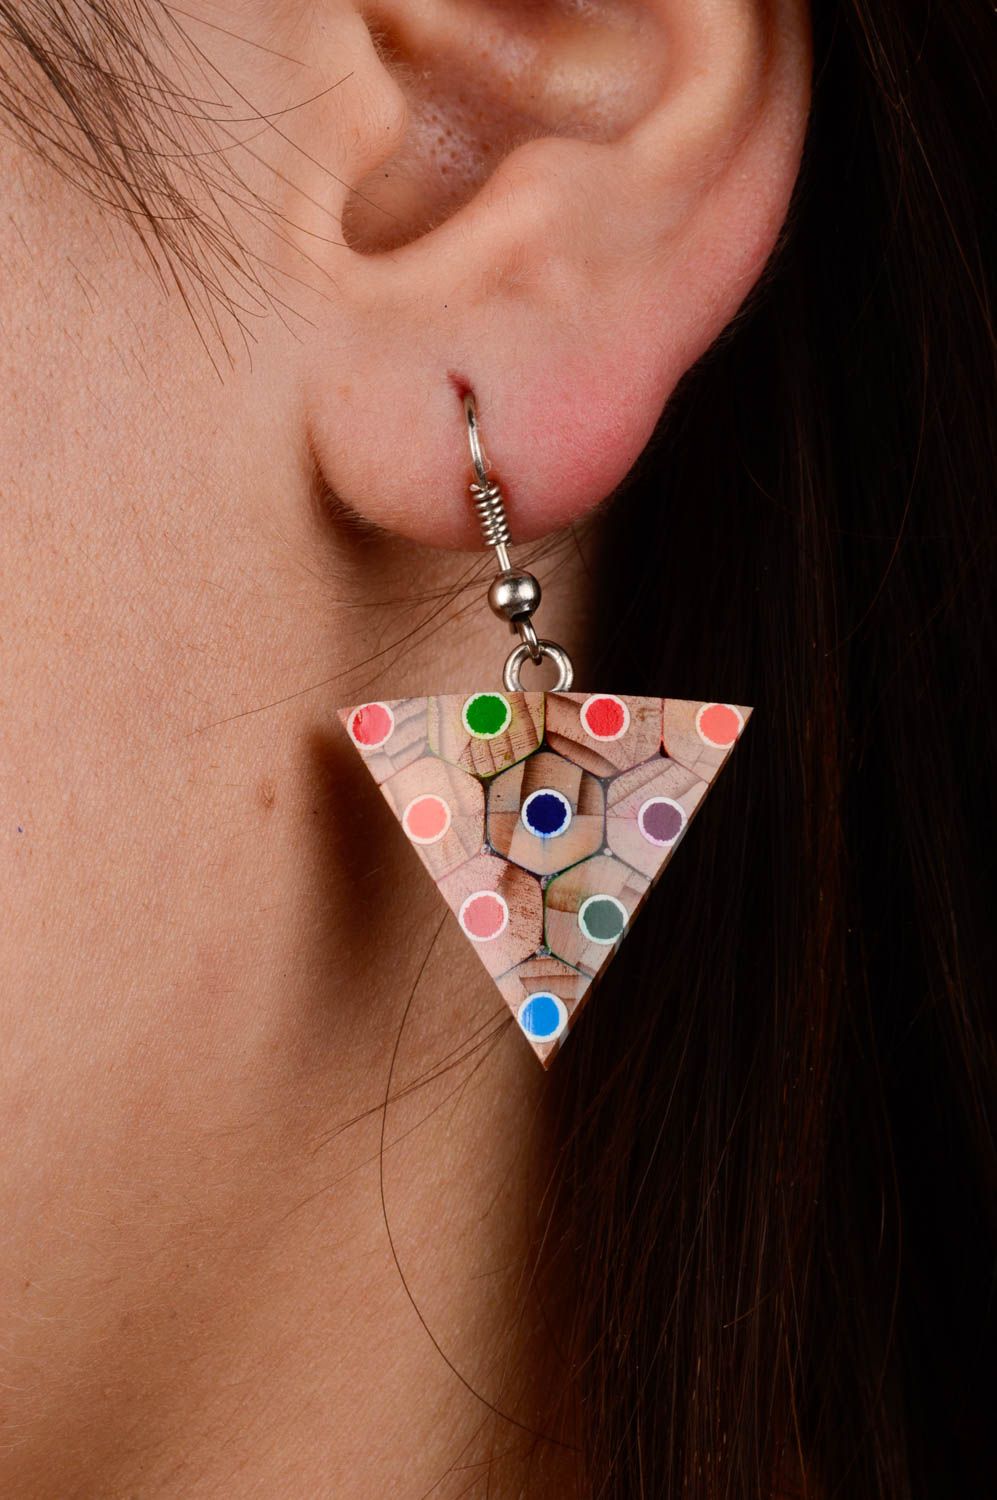 Homemade jewelry wood earrings designer accessories cute earrings cool gifts photo 2